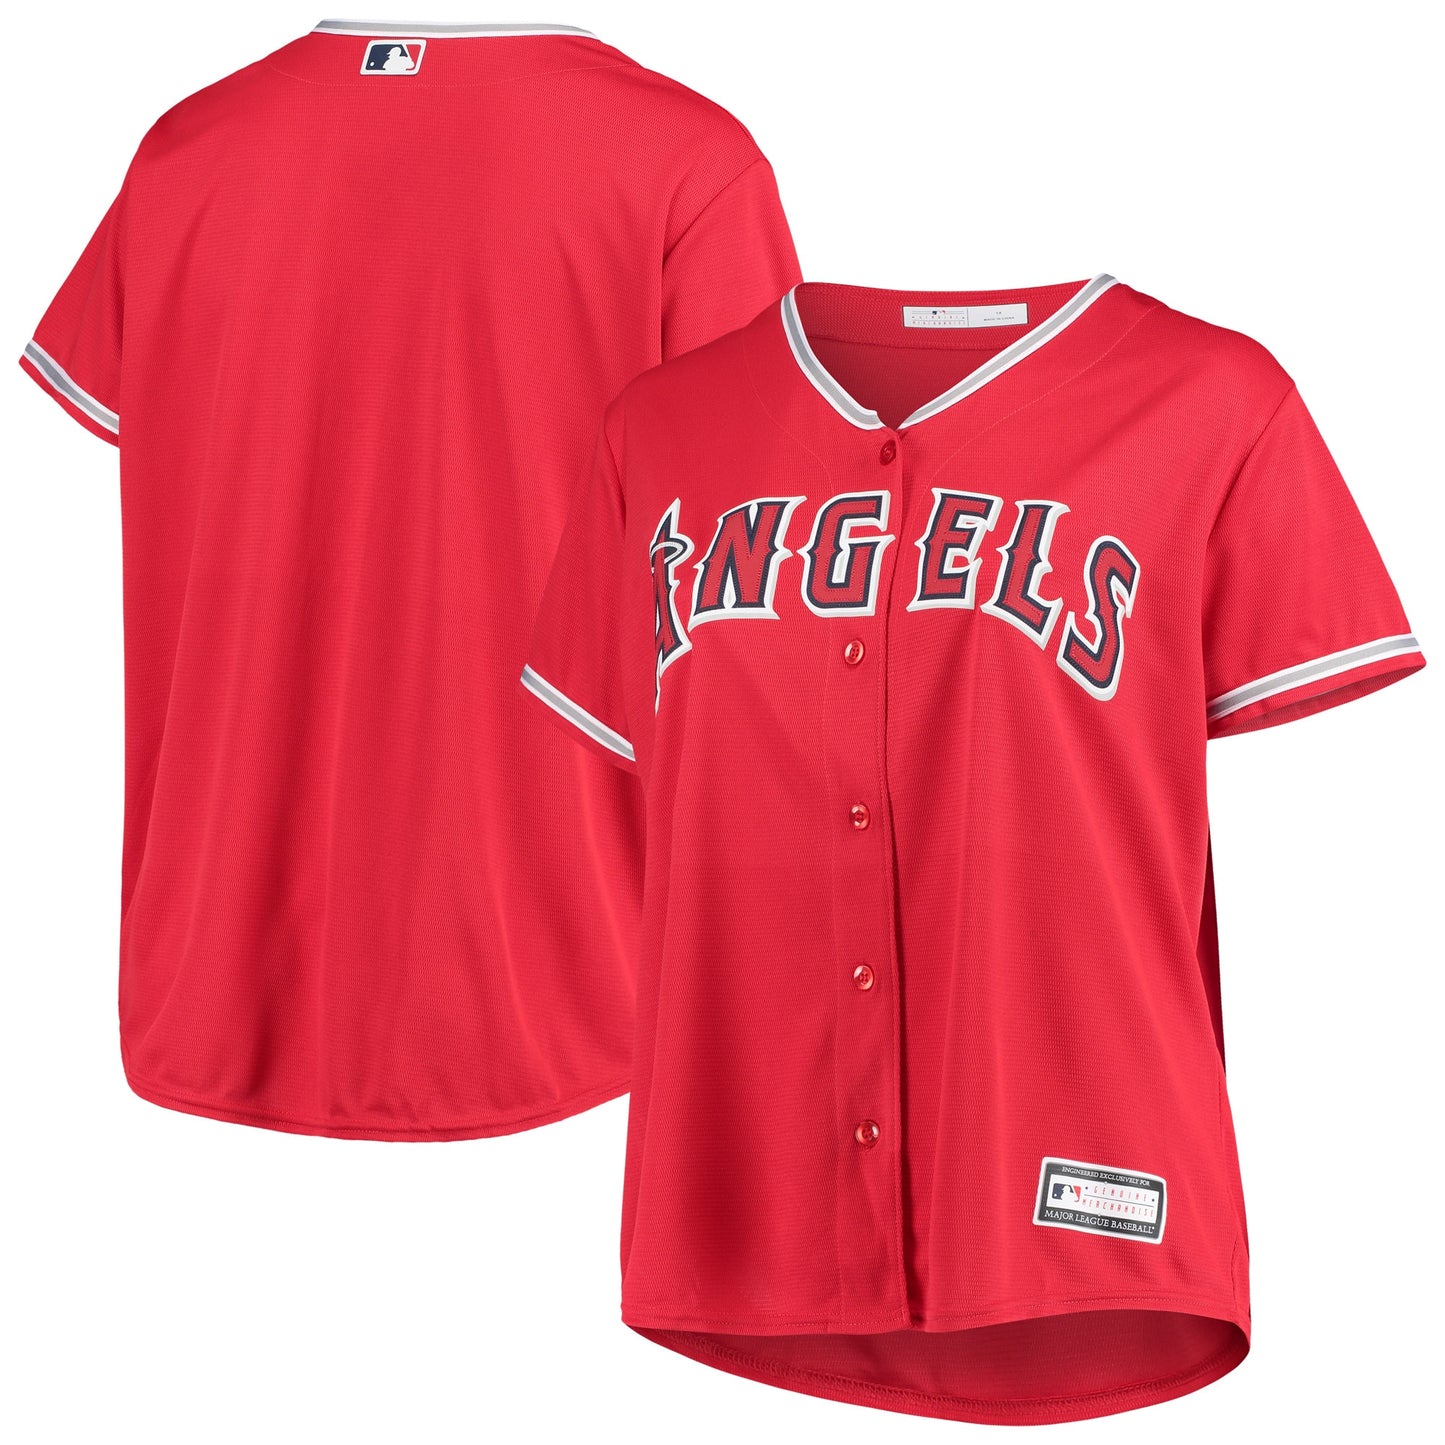 Los Angeles Angels Women's Plus Size Alternate Replica Team Jersey - Red